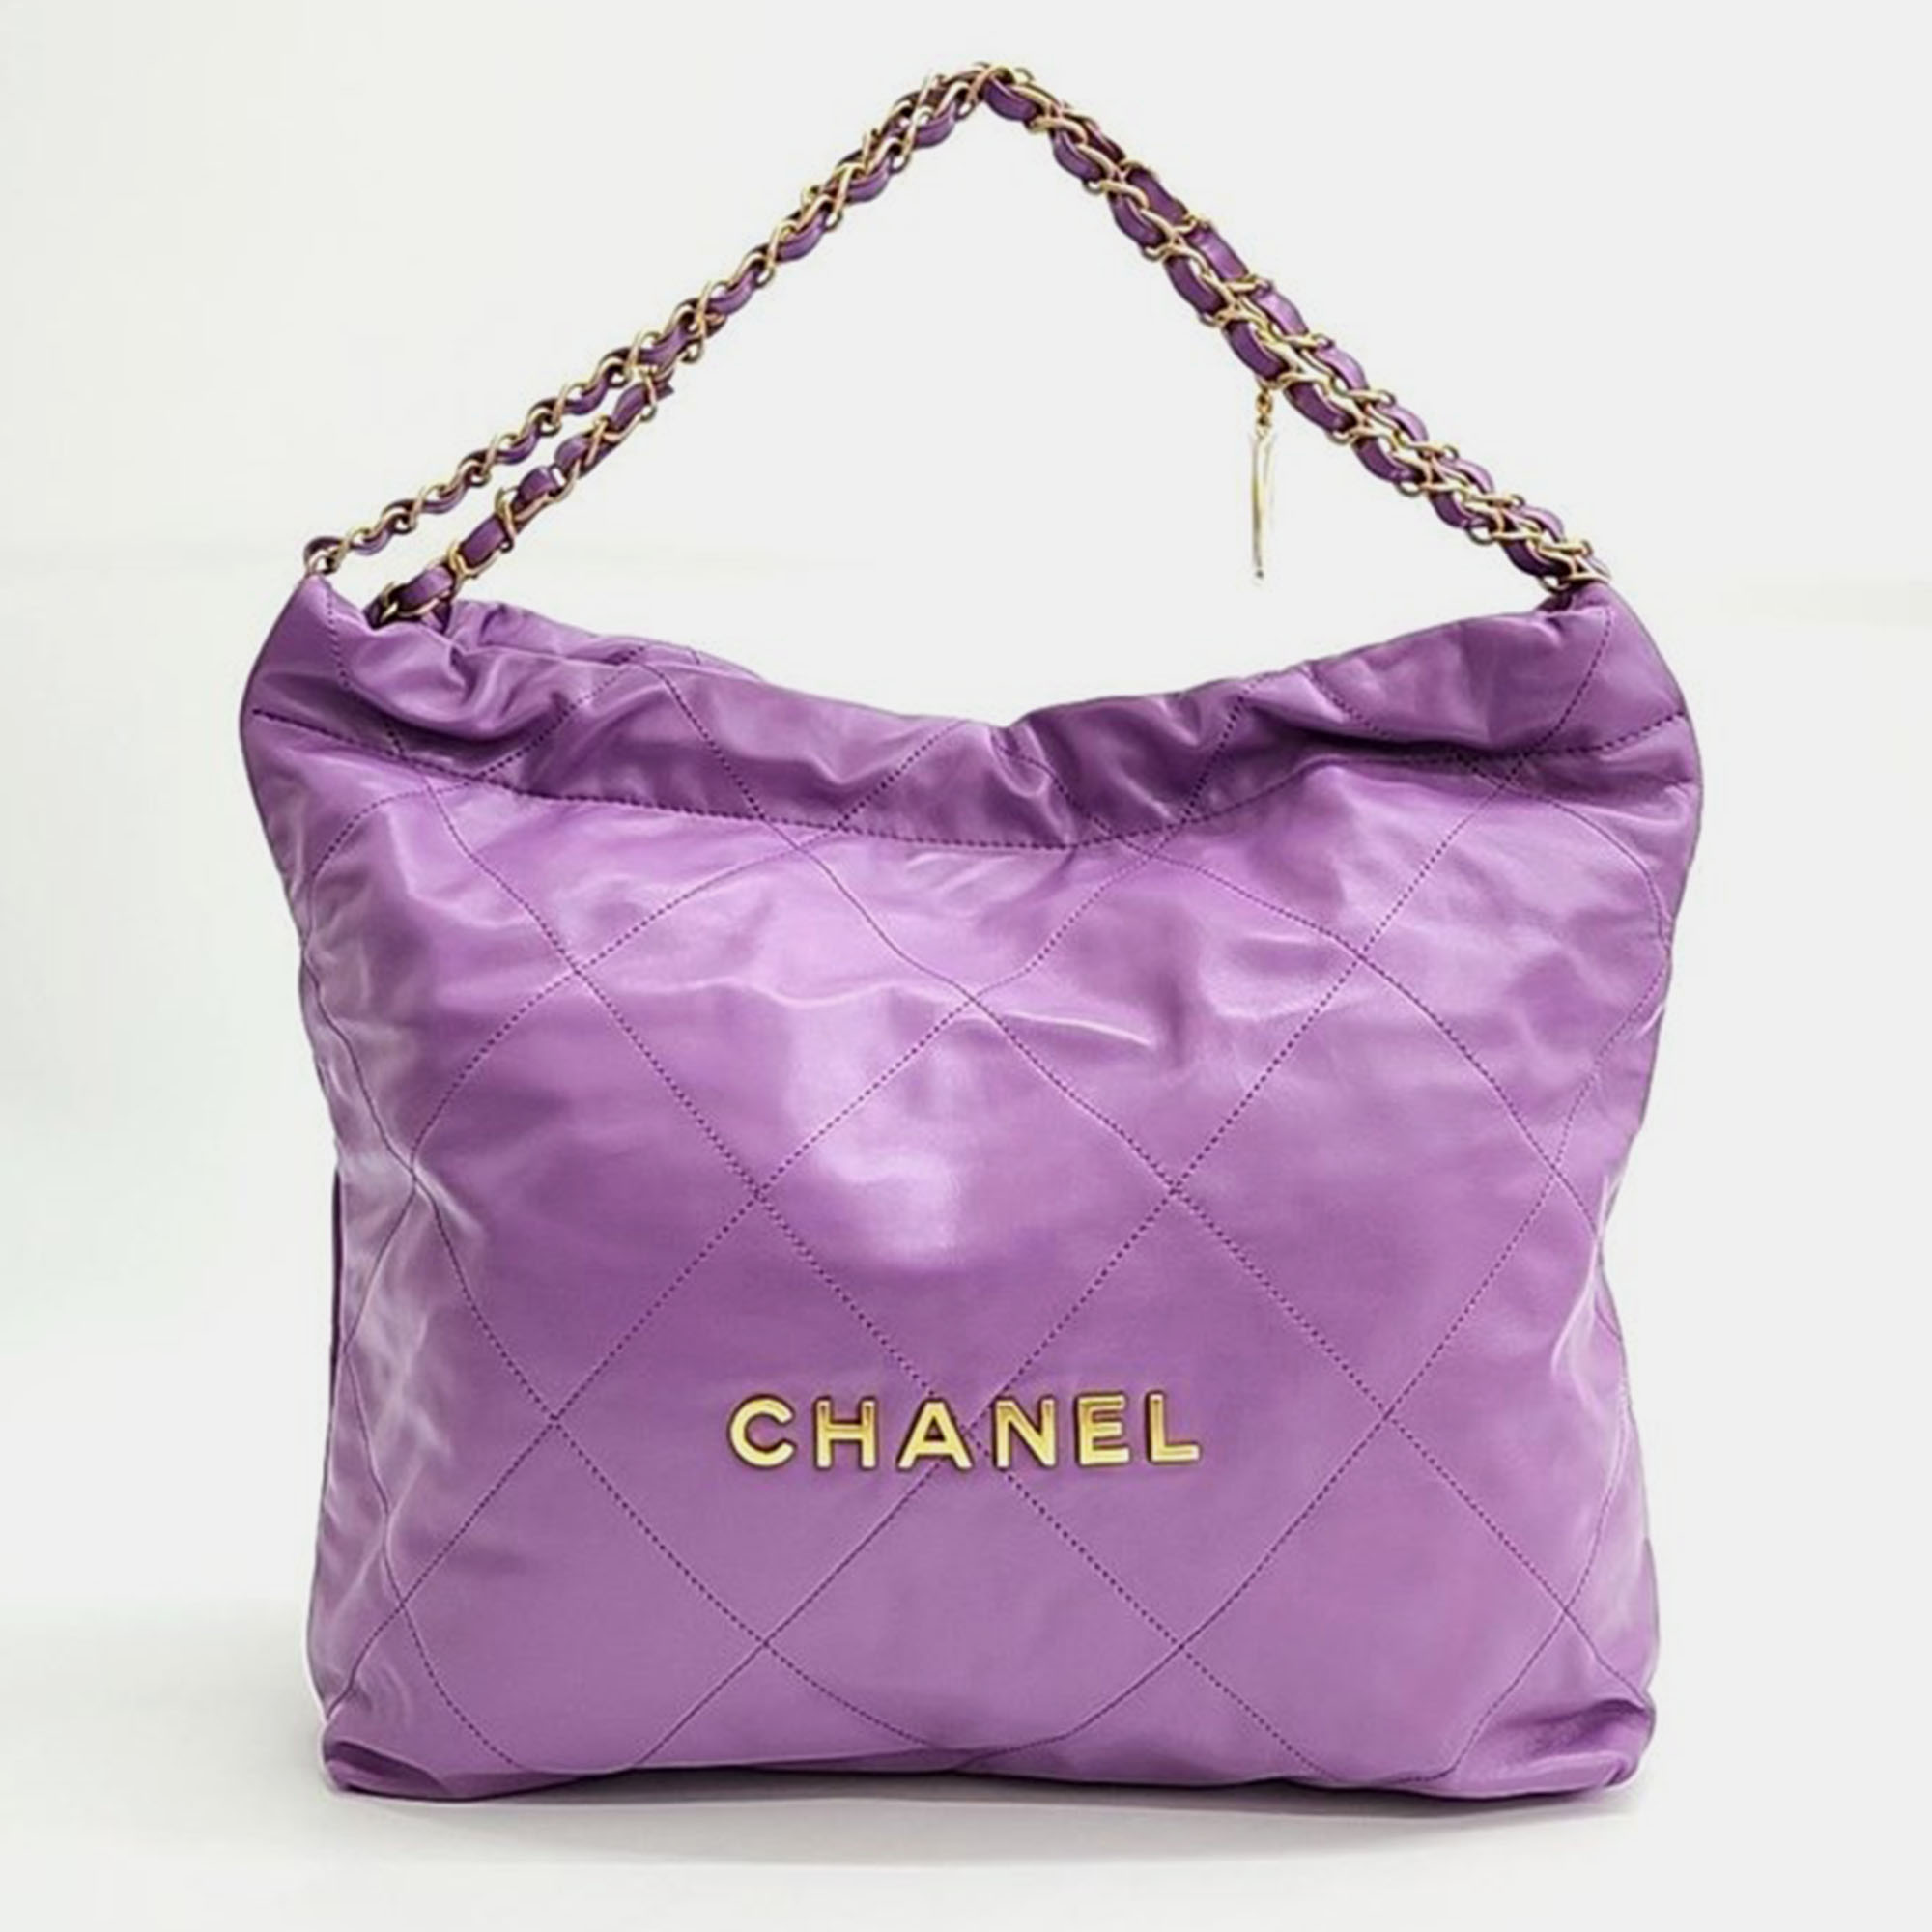 Chanel 22 leather purple bag 35